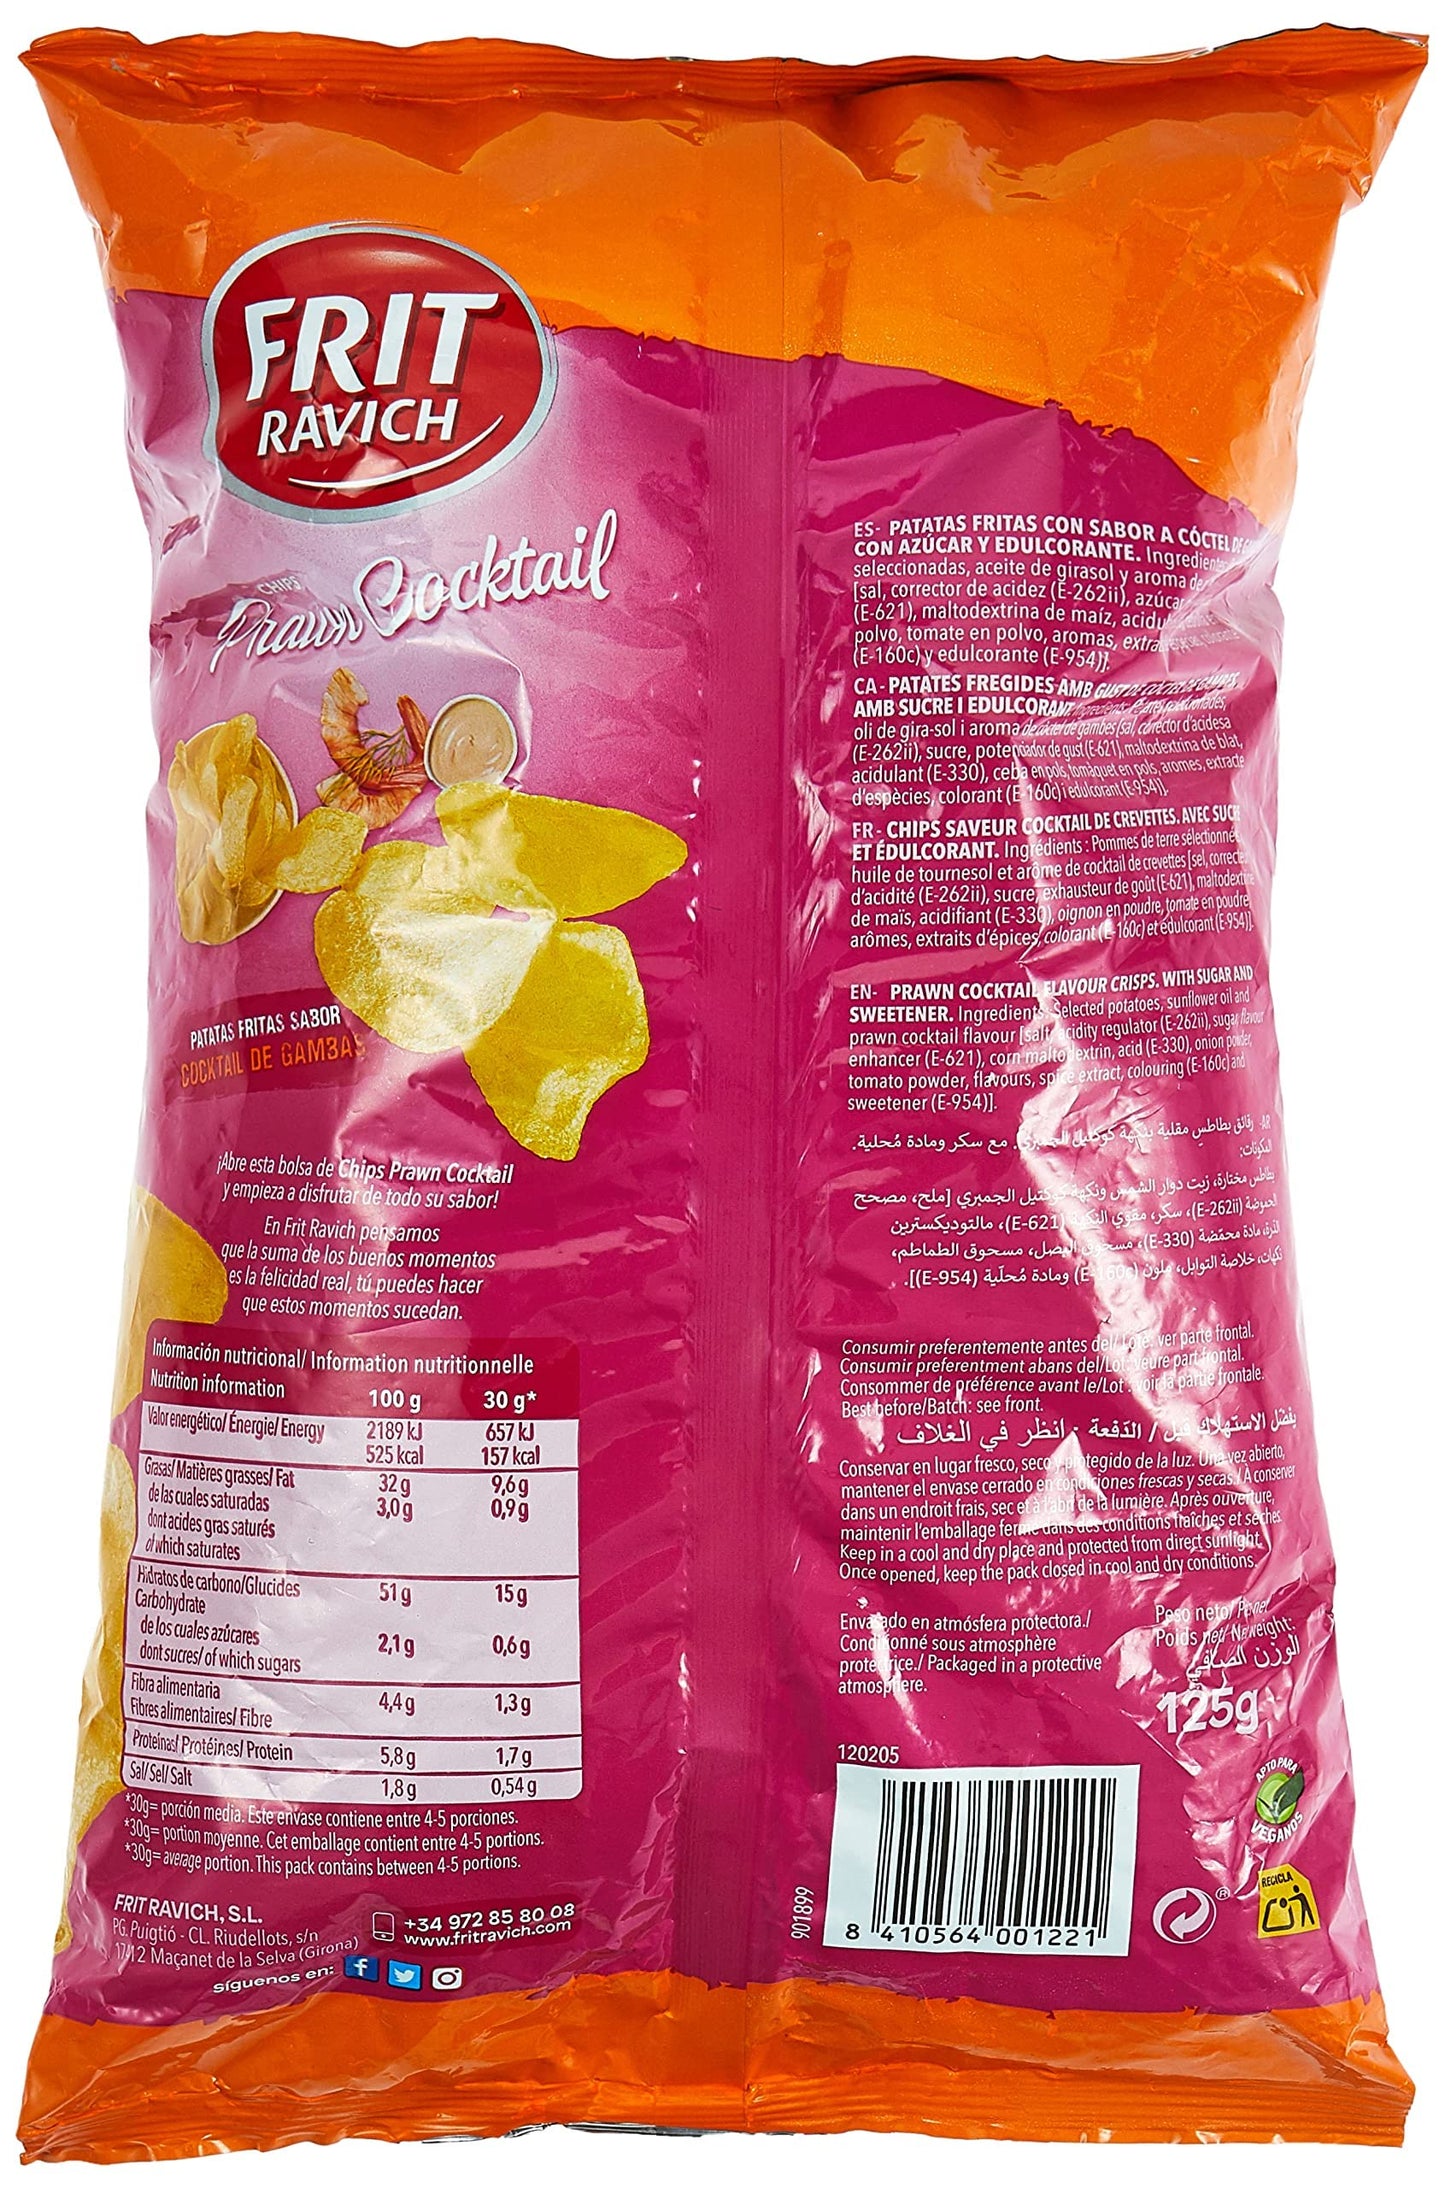 Frit Ravich Chips, Prawan Cooktial (Spain)